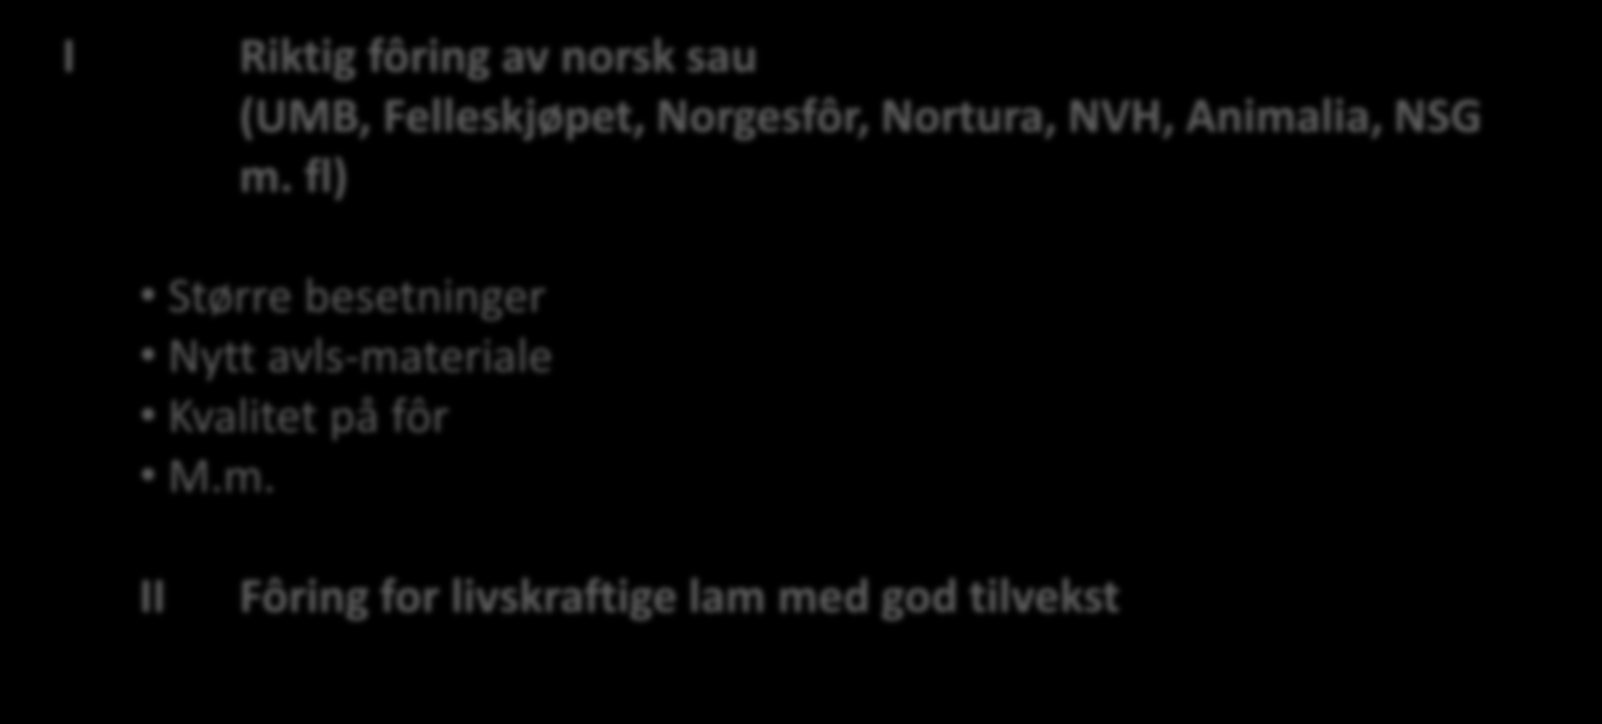 Forskning Fôring I Riktig fôring av norsk sau (UMB, Felleskjøpet, Norgesfôr, Nortura, NVH, Animalia, NSG m.